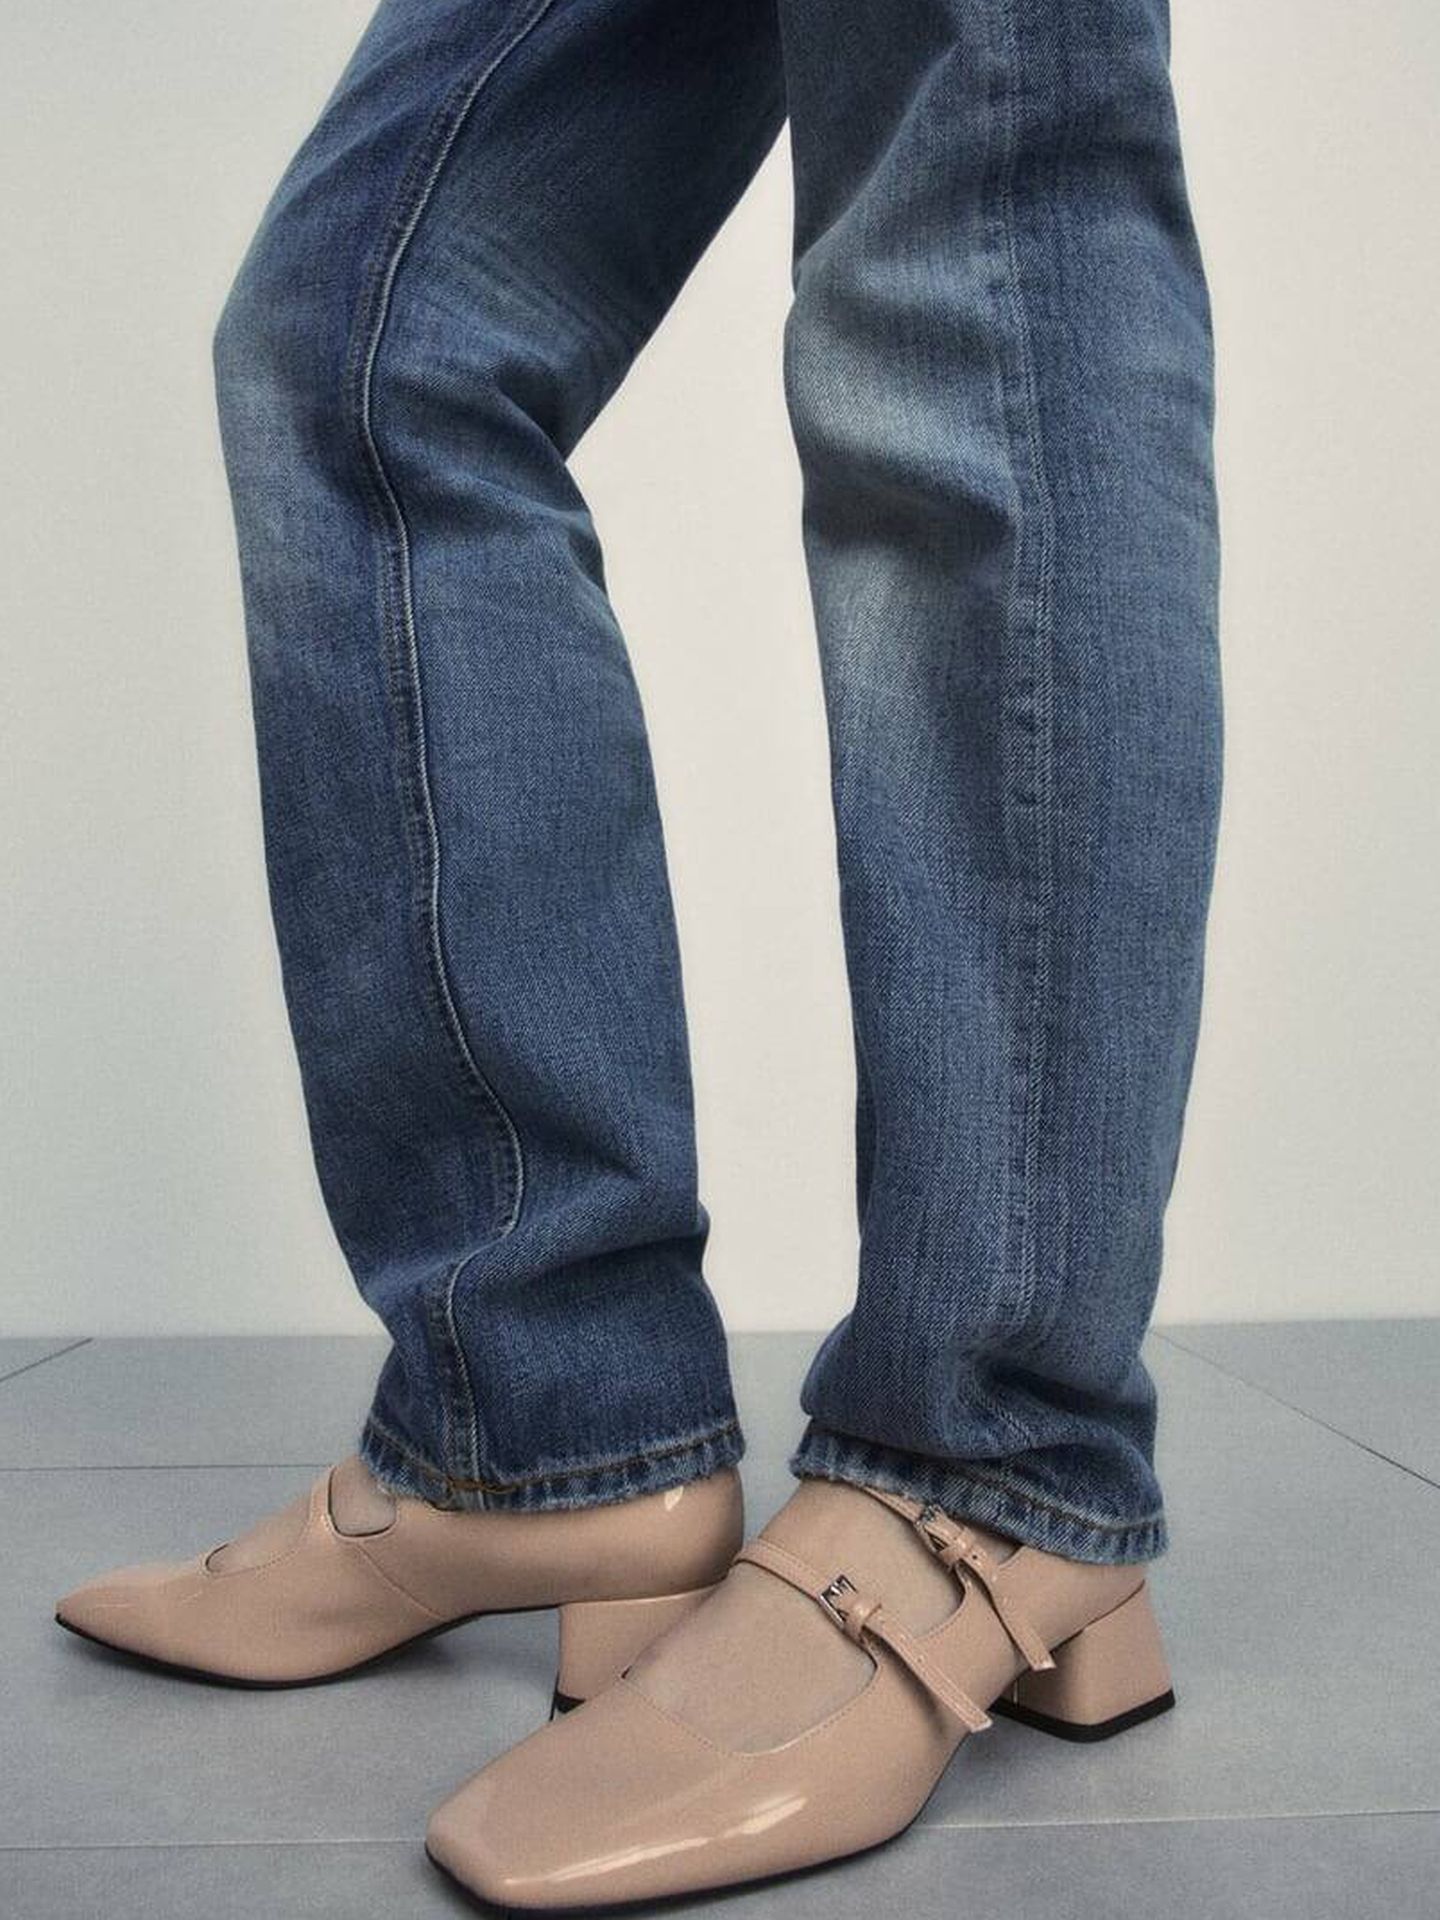 Combinación del zapato merceditas de Zara con pantalón casual Denim. (ZARA)